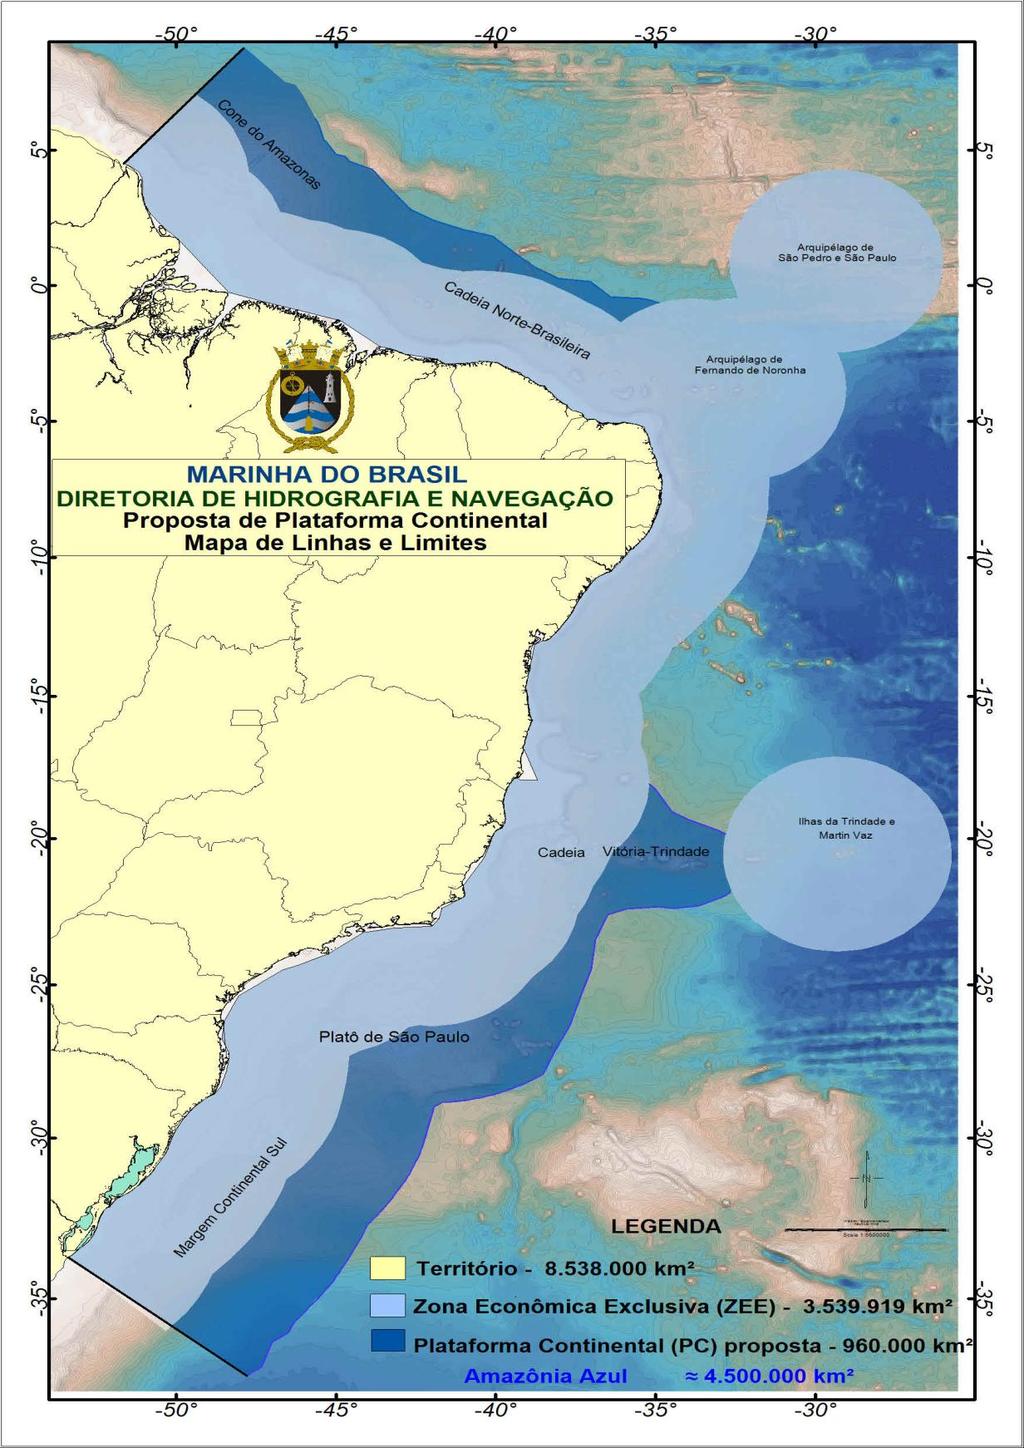 46 FIGURA 8 A Amazônia Azul Fonte: <https://www.mar.mil.